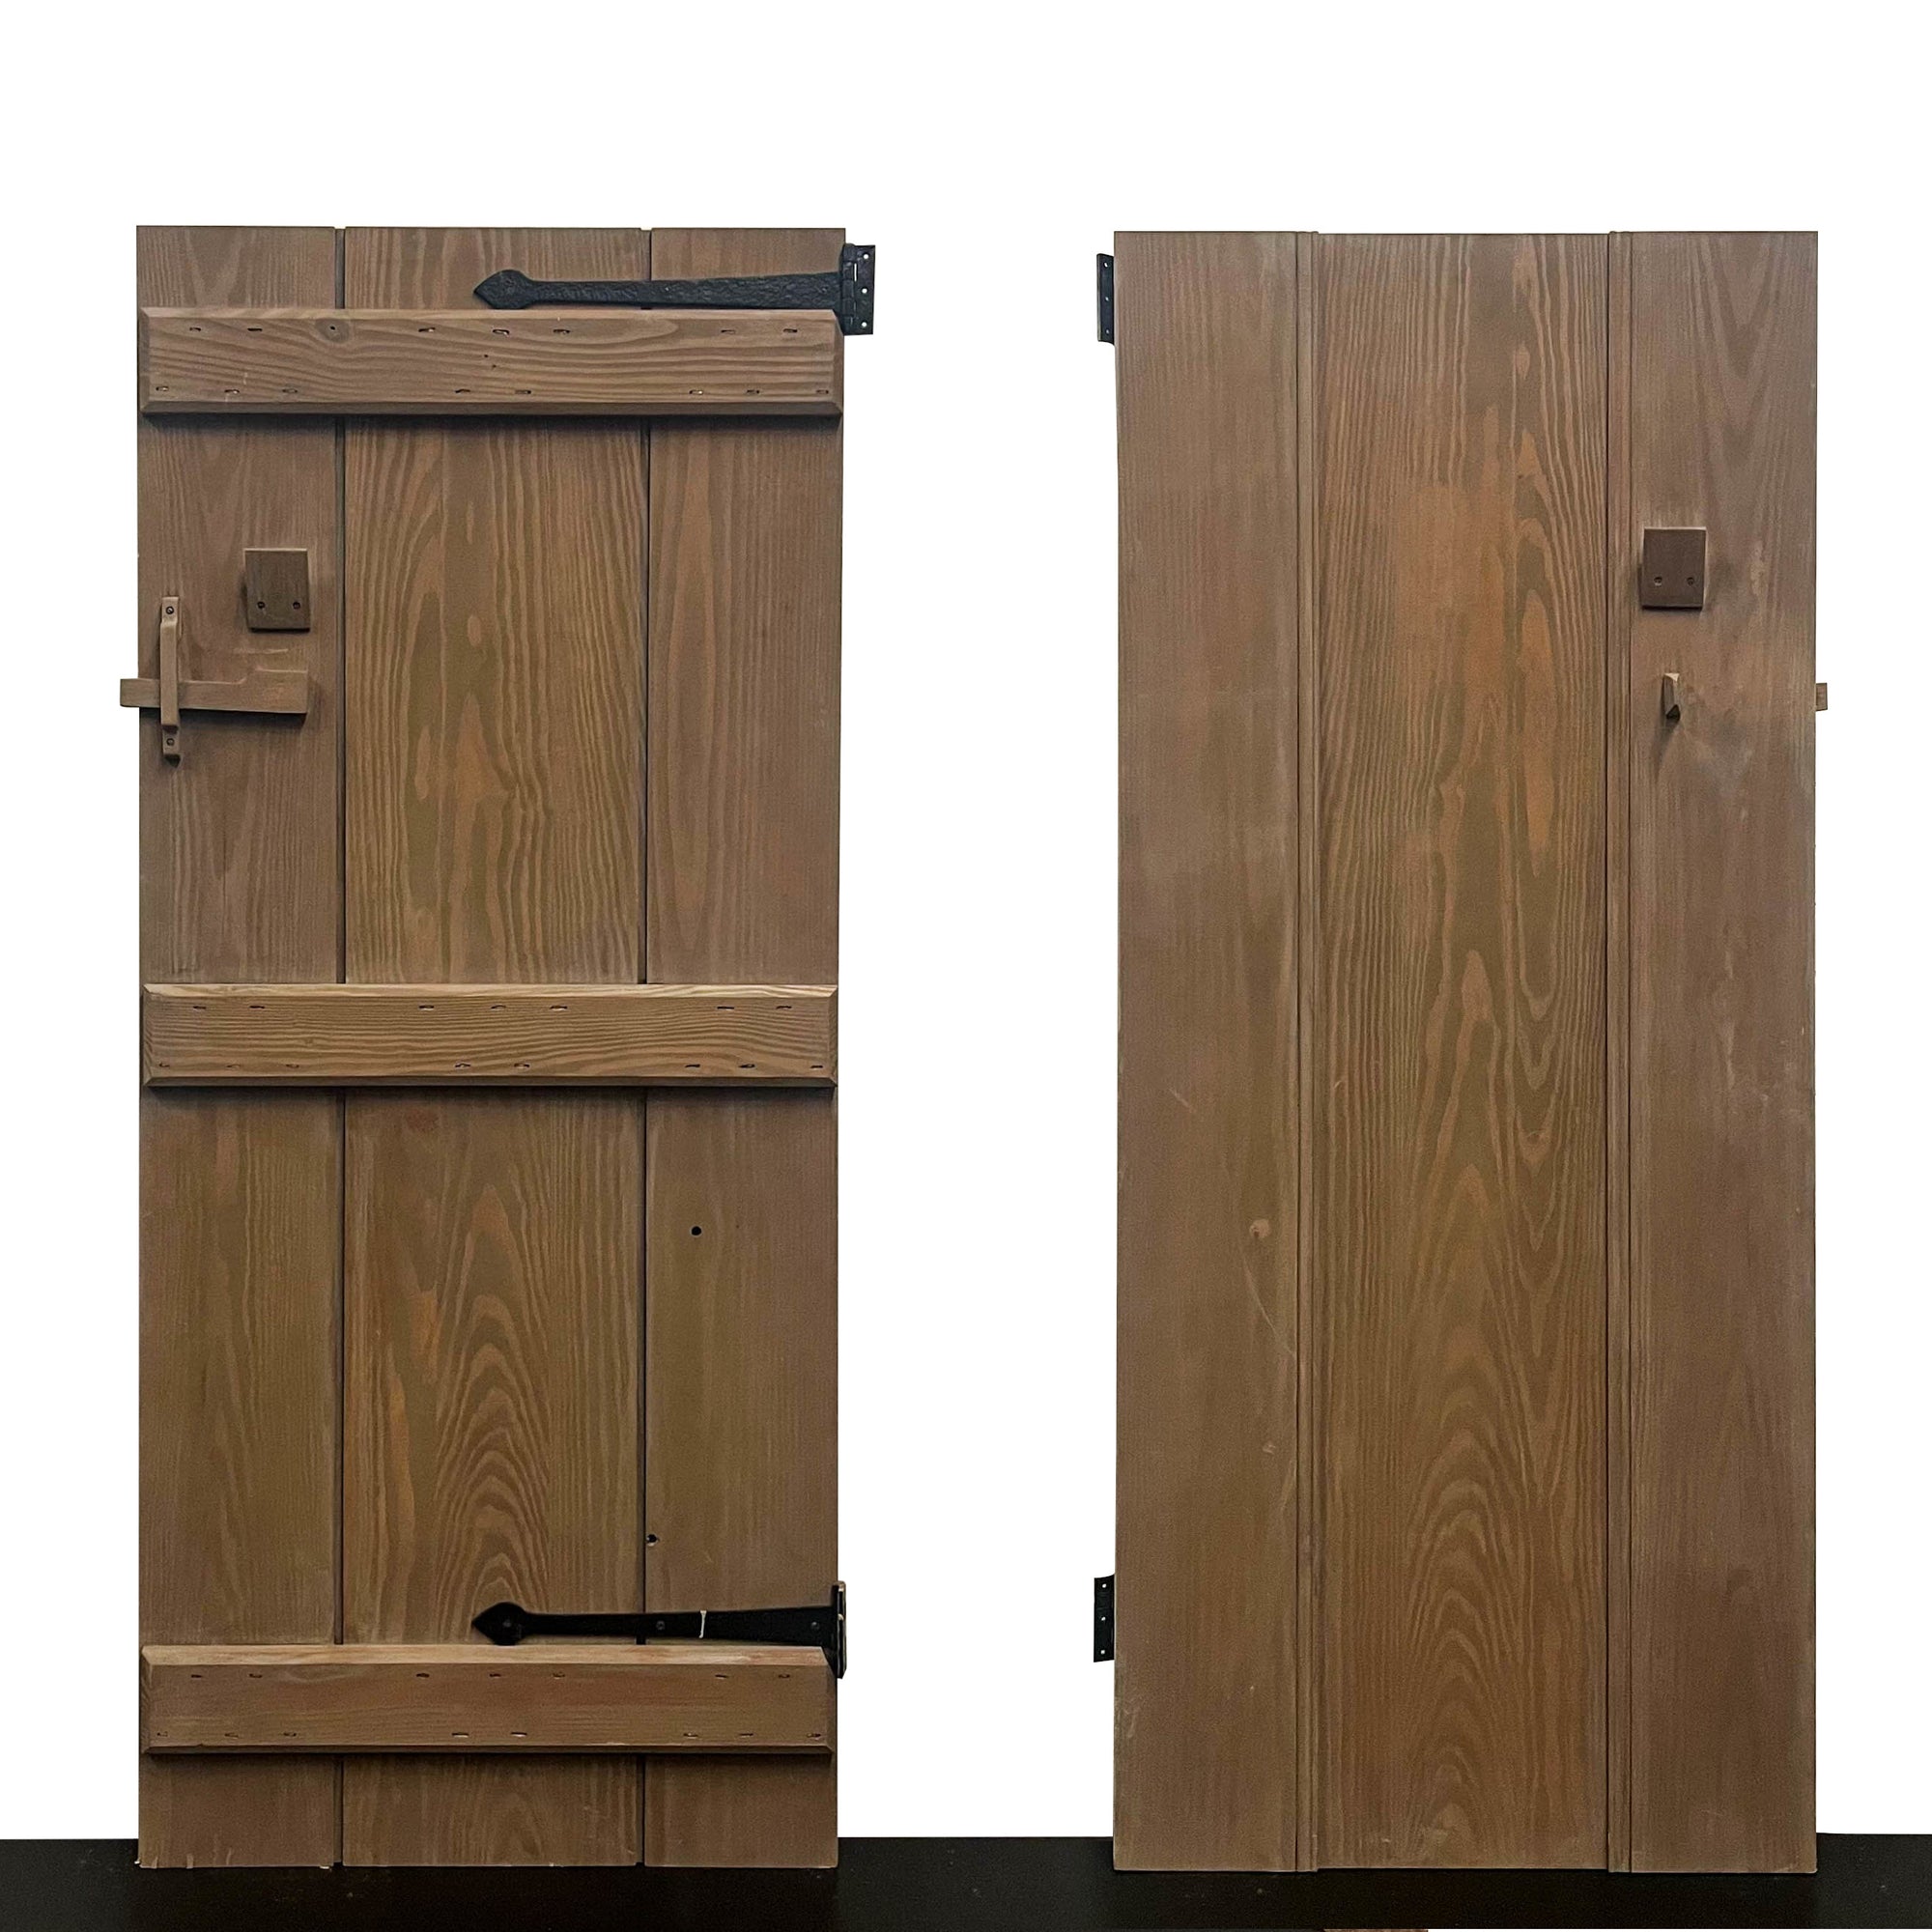 Antique Victorian Pine Latch Door - 193.5cm x 82.5cm | The Architectural Forum